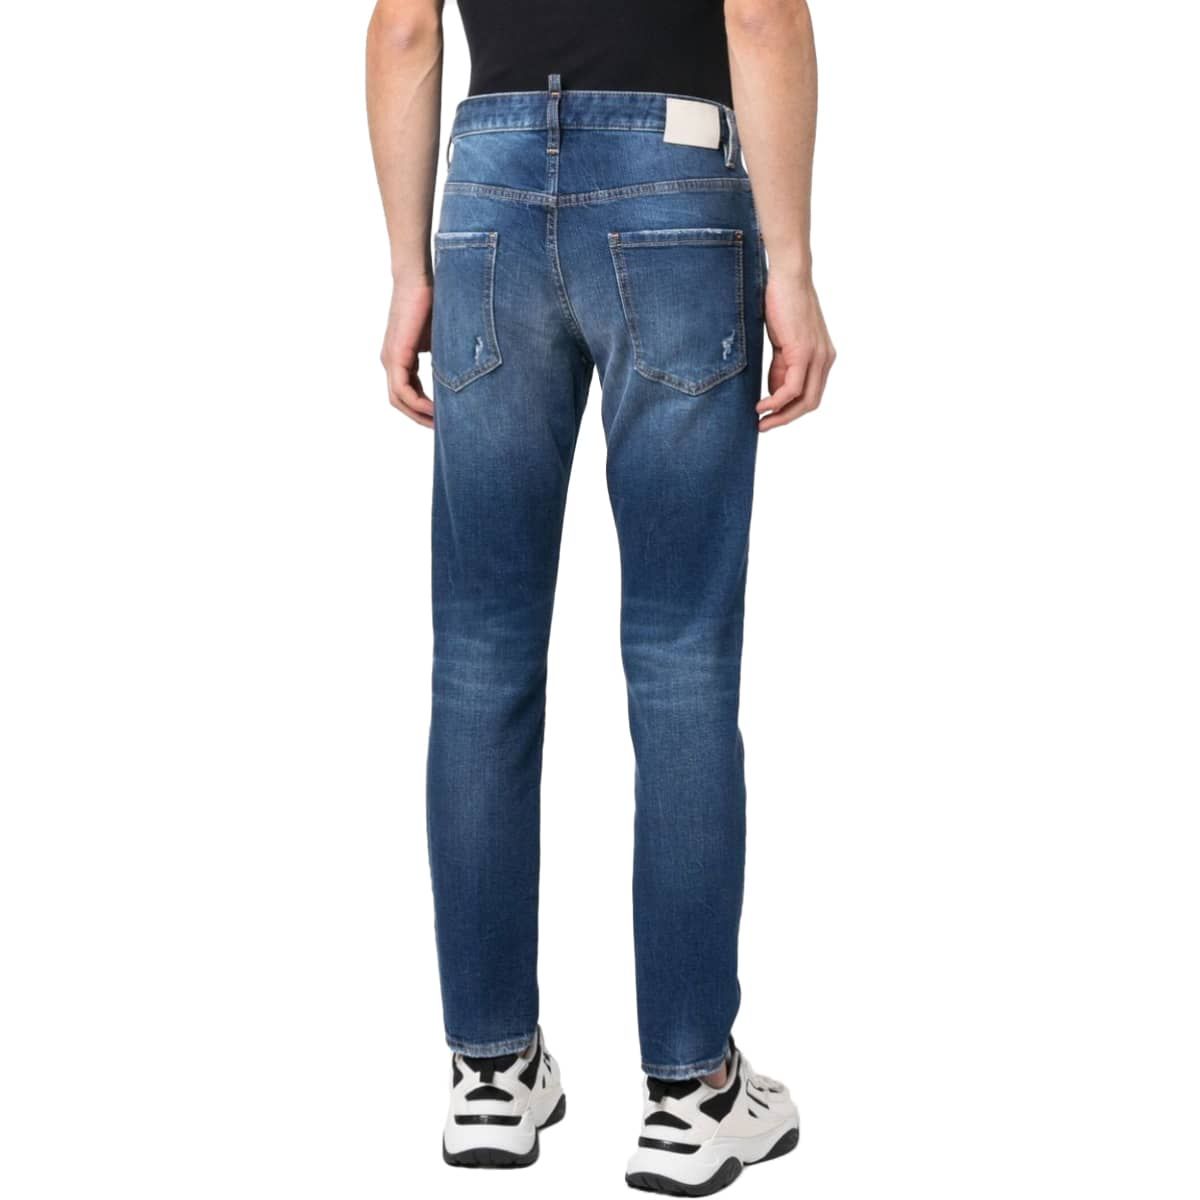 Medium Proper Wash Cool Guy Jeans